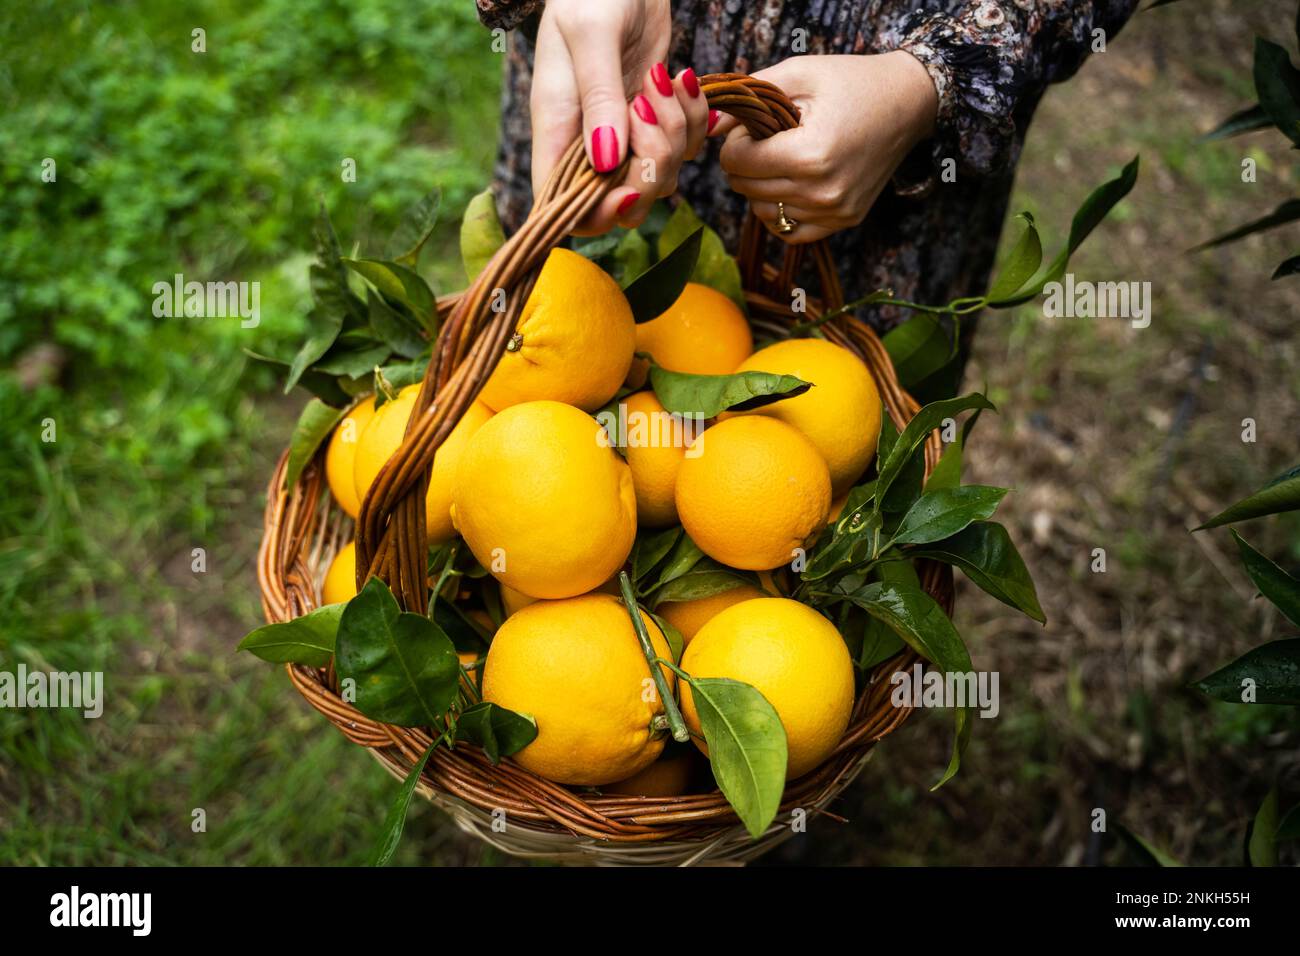 Hands of woman holding orange fruit's basket Stock Photo